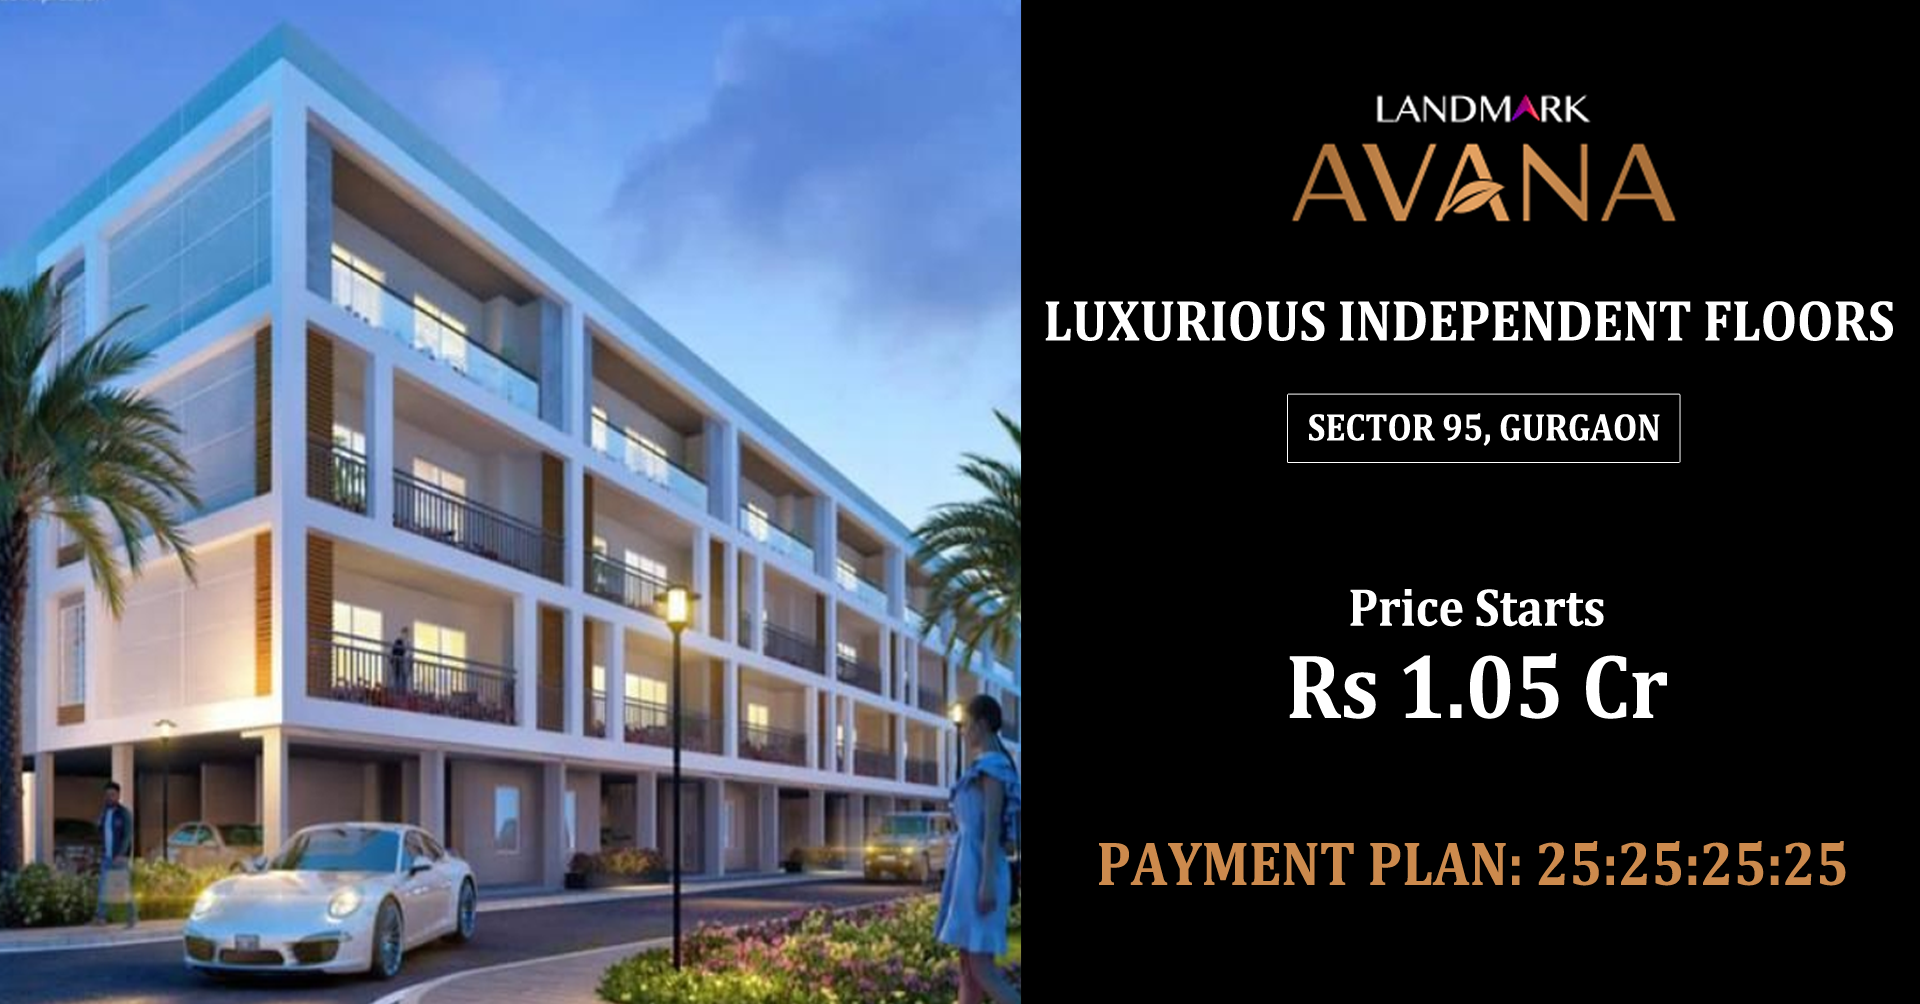 Book 3 BHK Luxury low rise floors starting price Rs. 1.05 Cr at Landmark Avana, Gurgaon Update